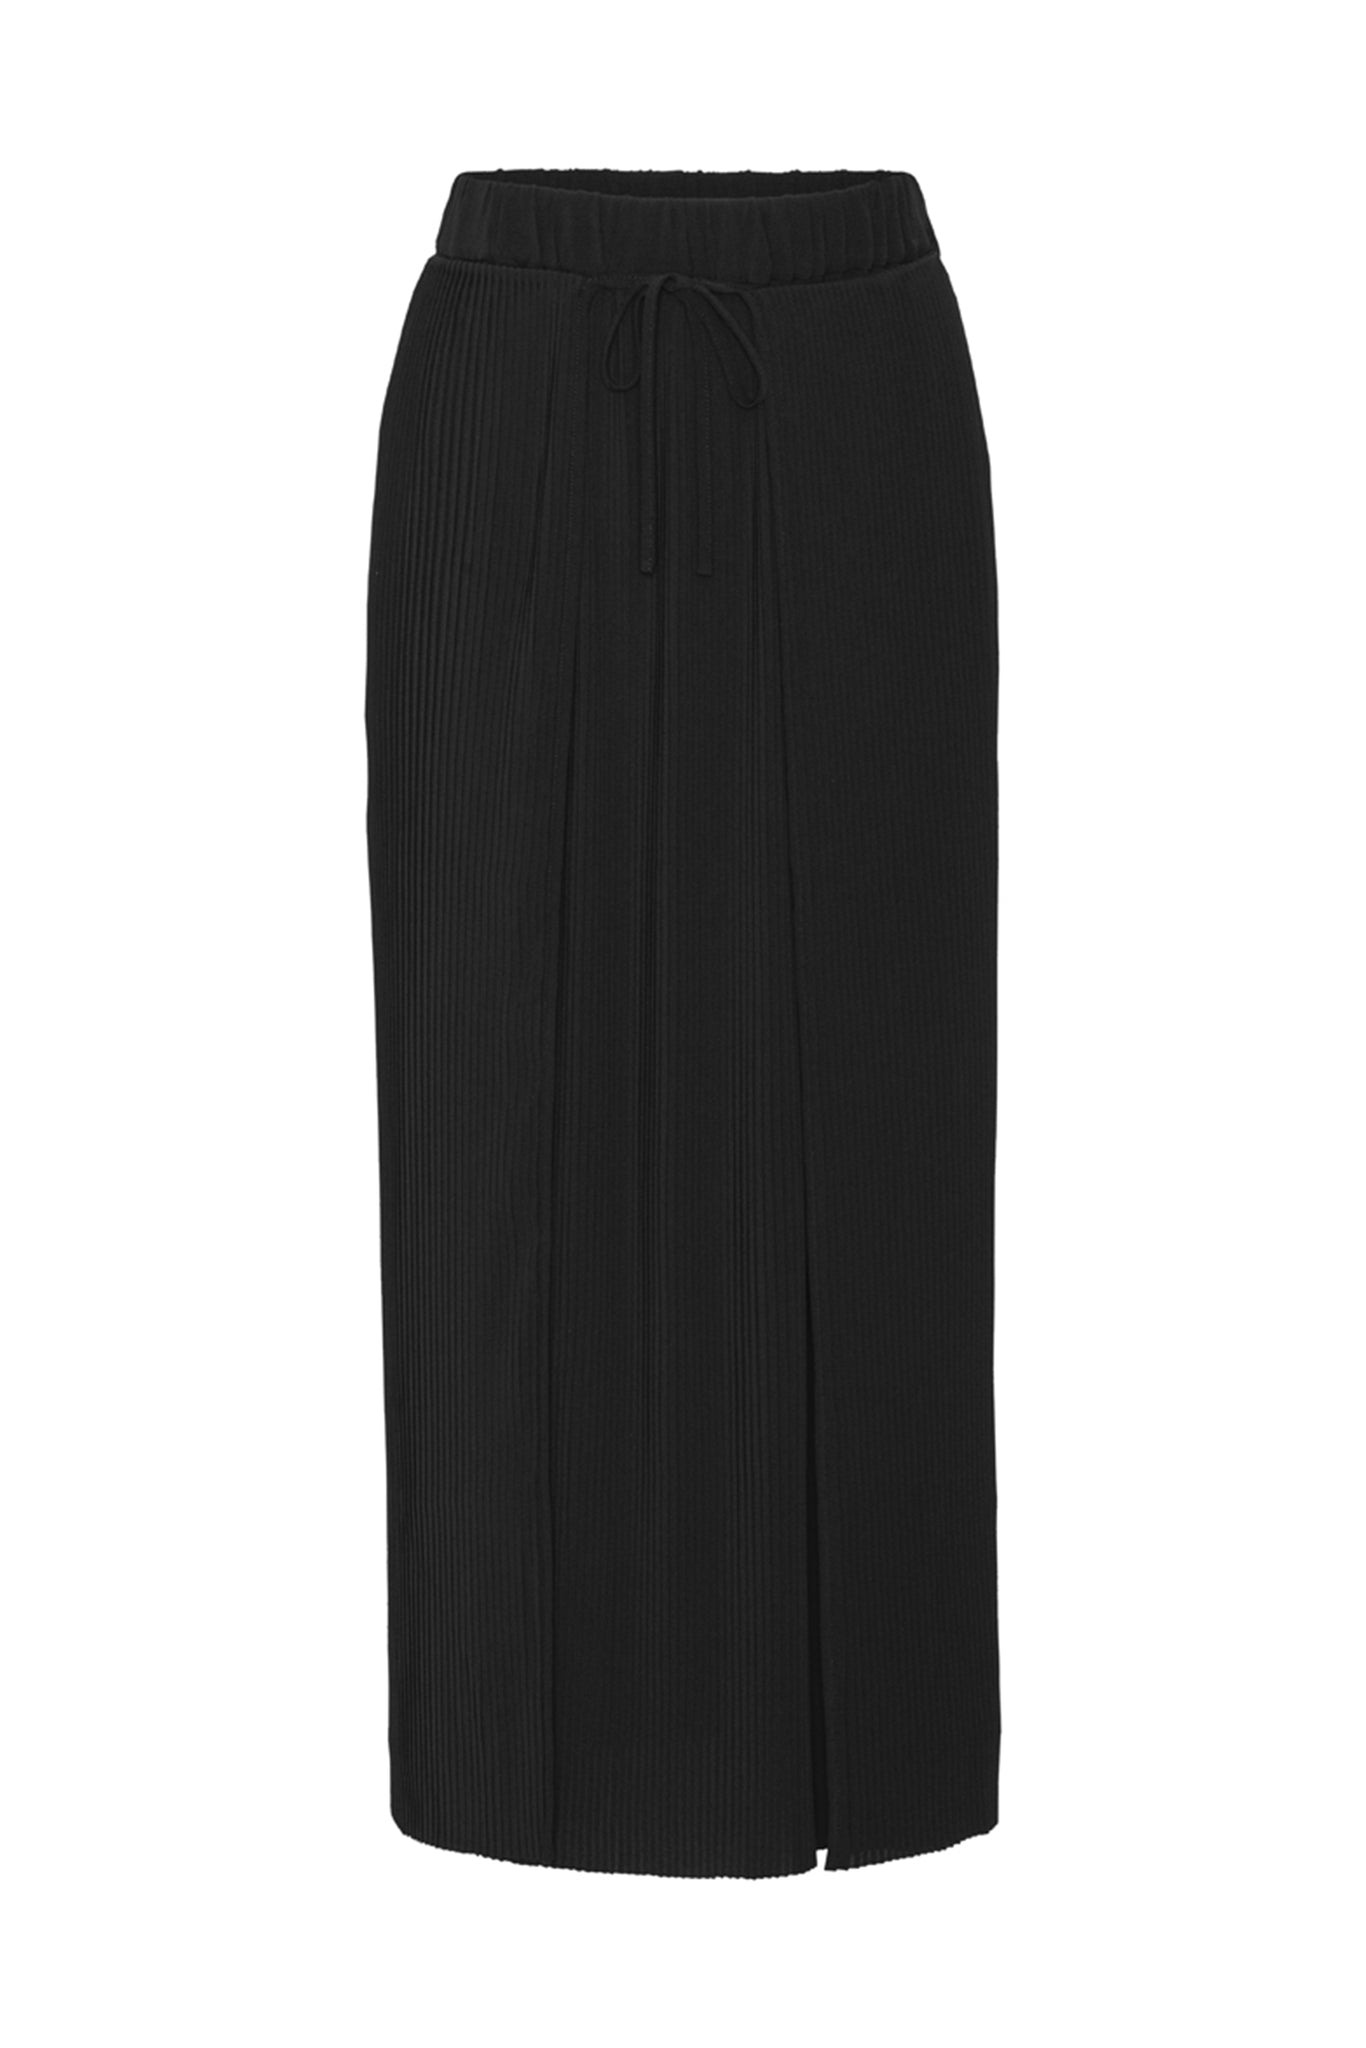 Transit Plisse Skirt | Black